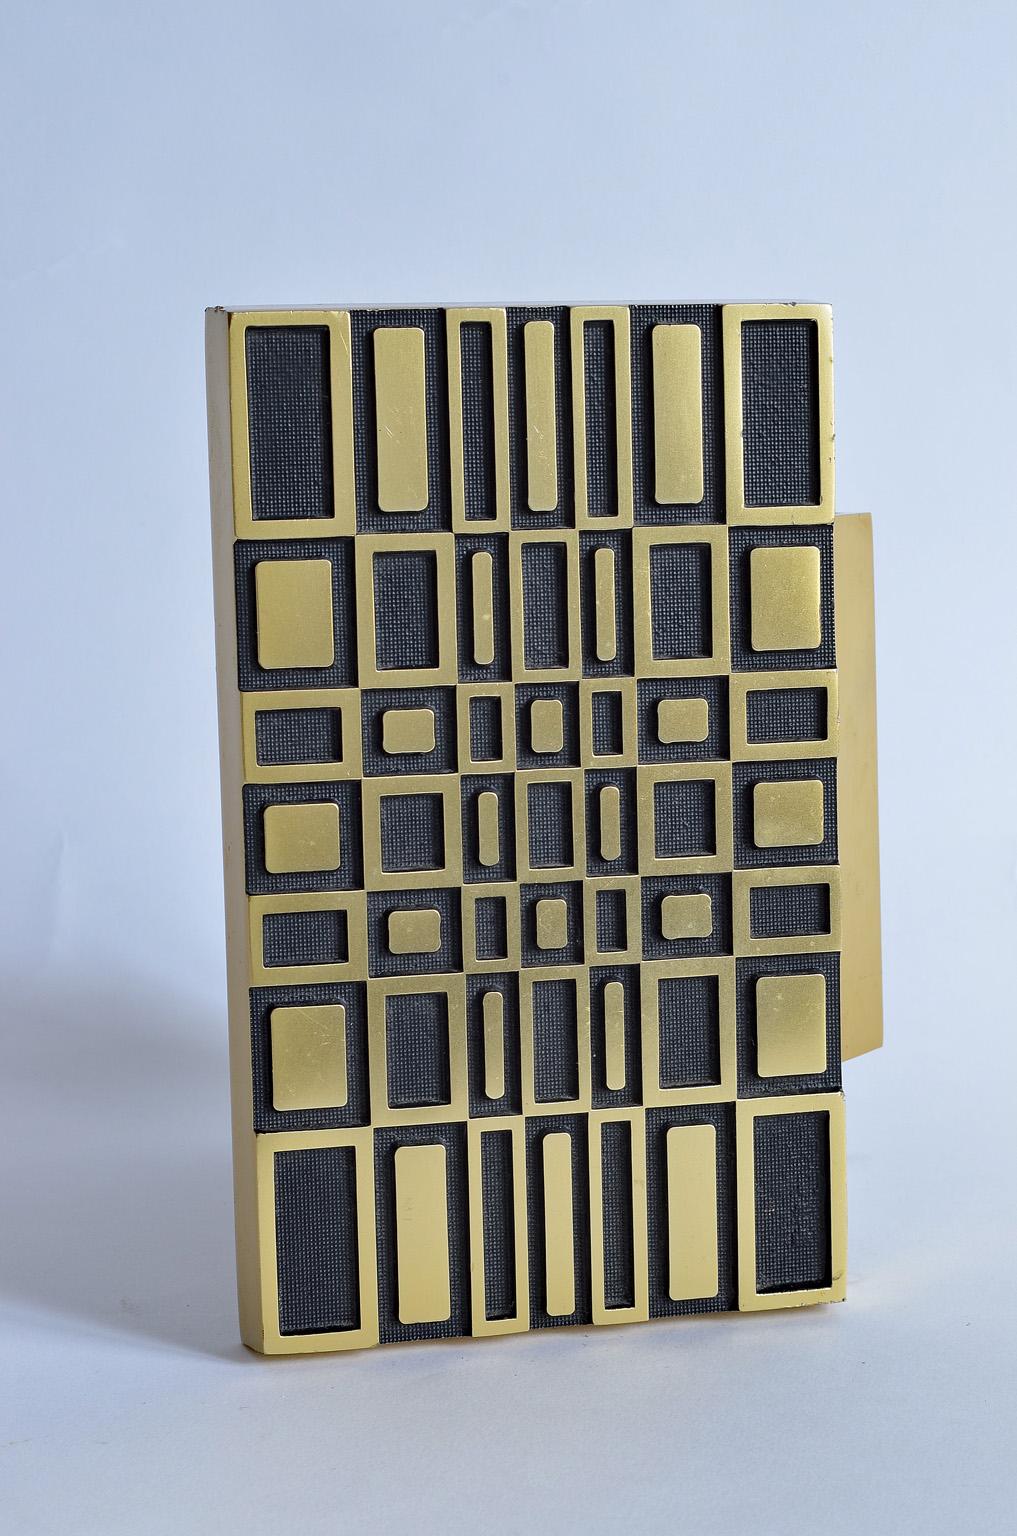 Pair of midcentury brass door handles geometric gold and black pattern design, 1970s, Germany.